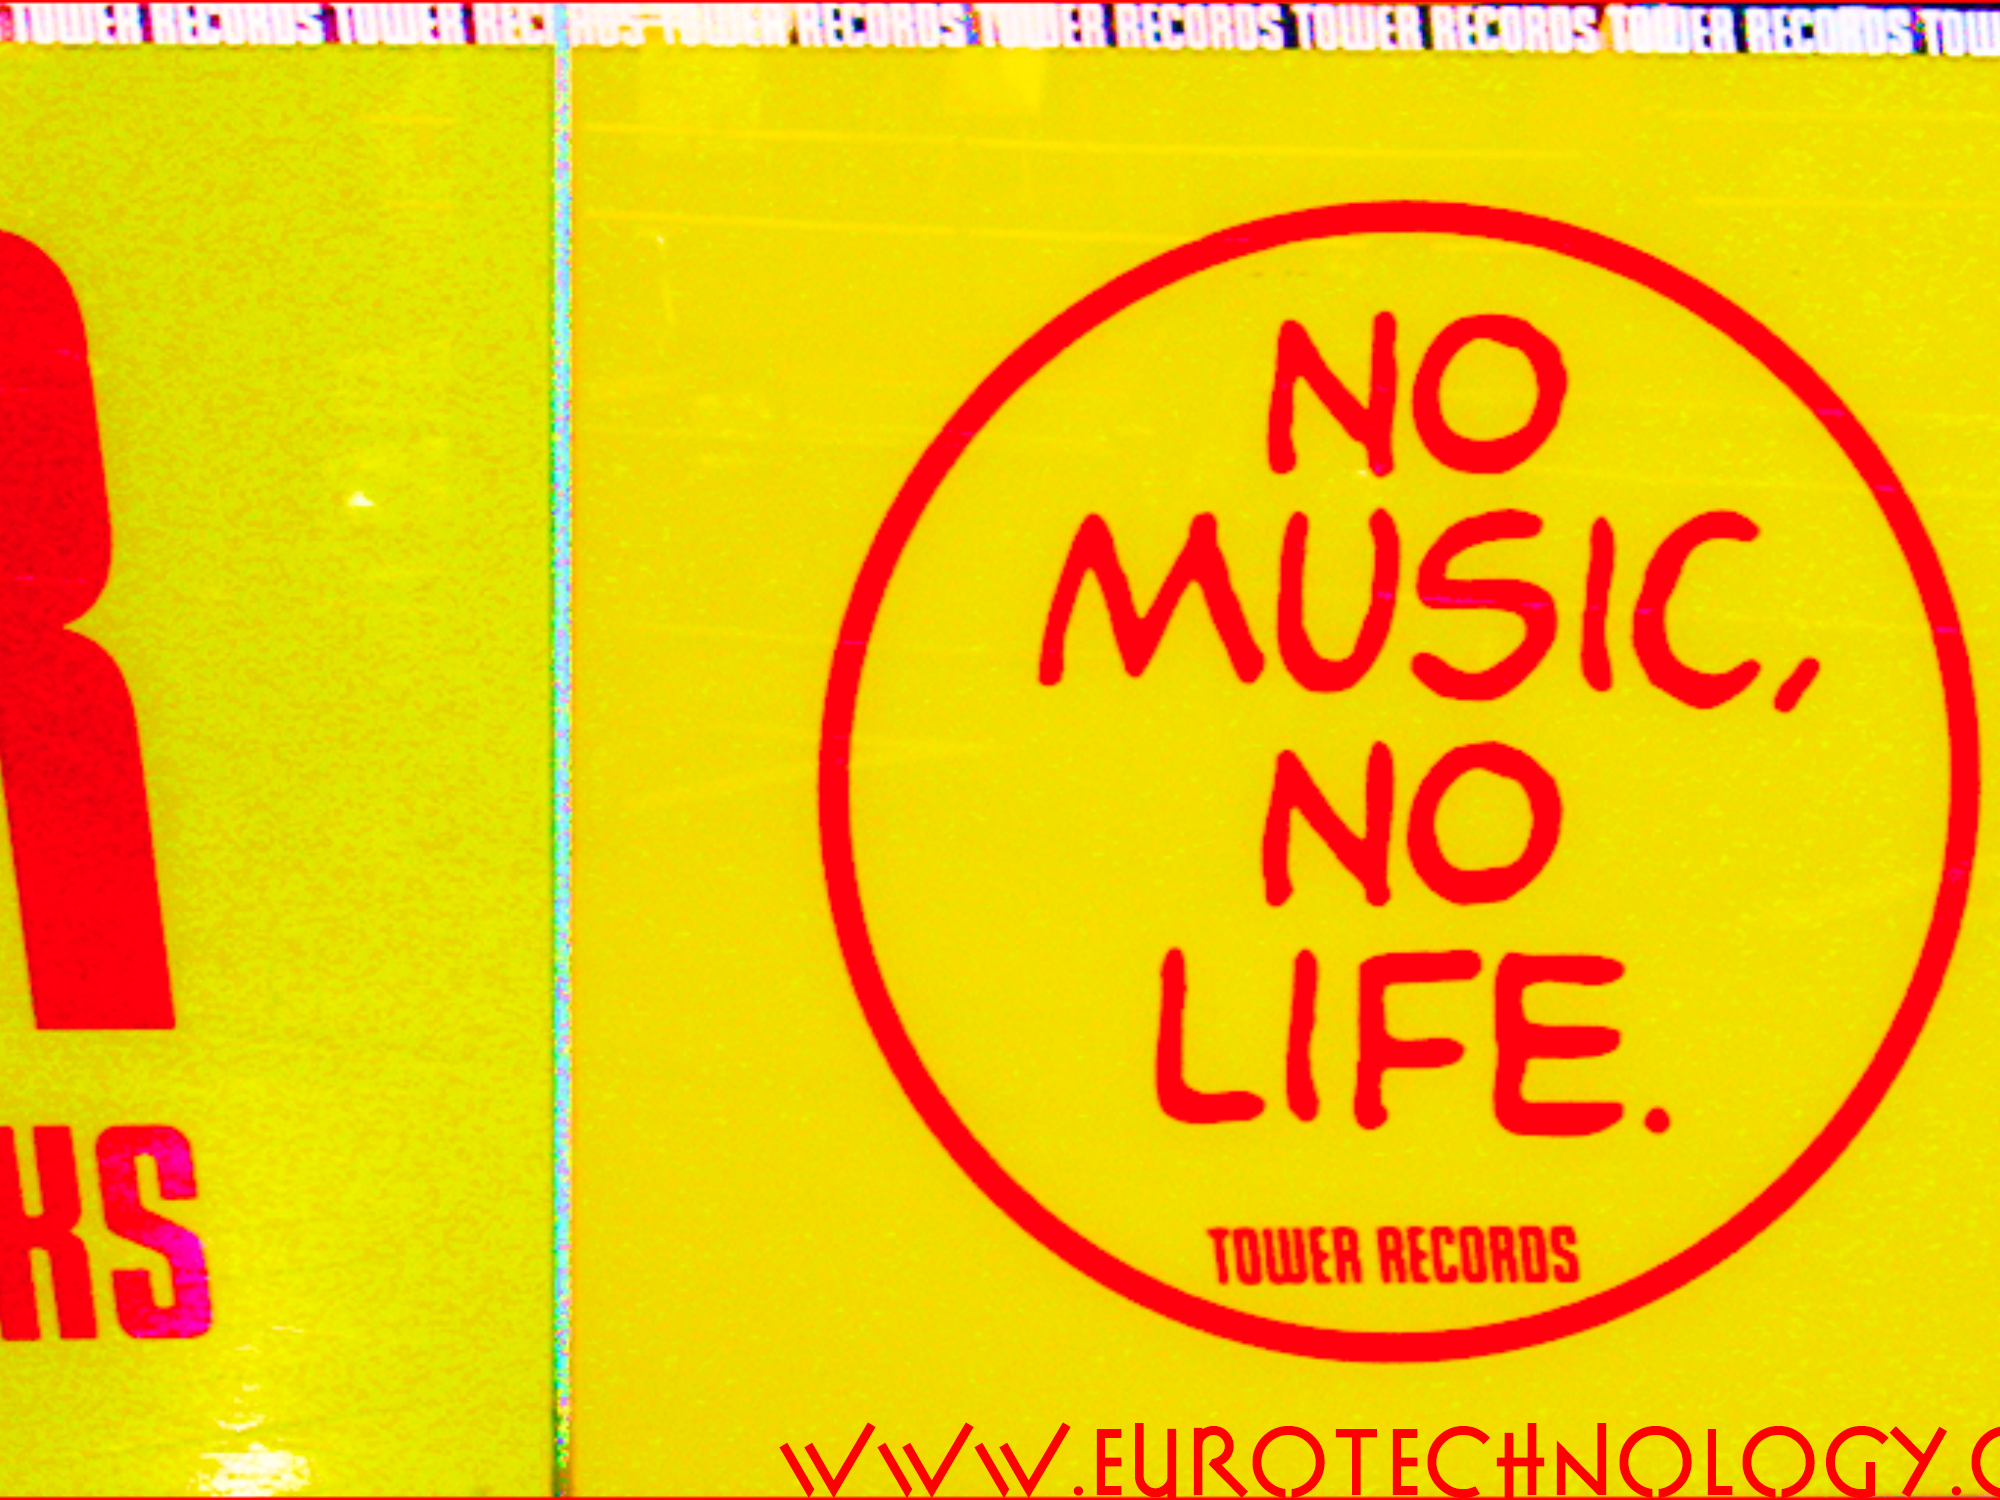 NTT Docomo acquisitions: Tower Records - No music, no life!